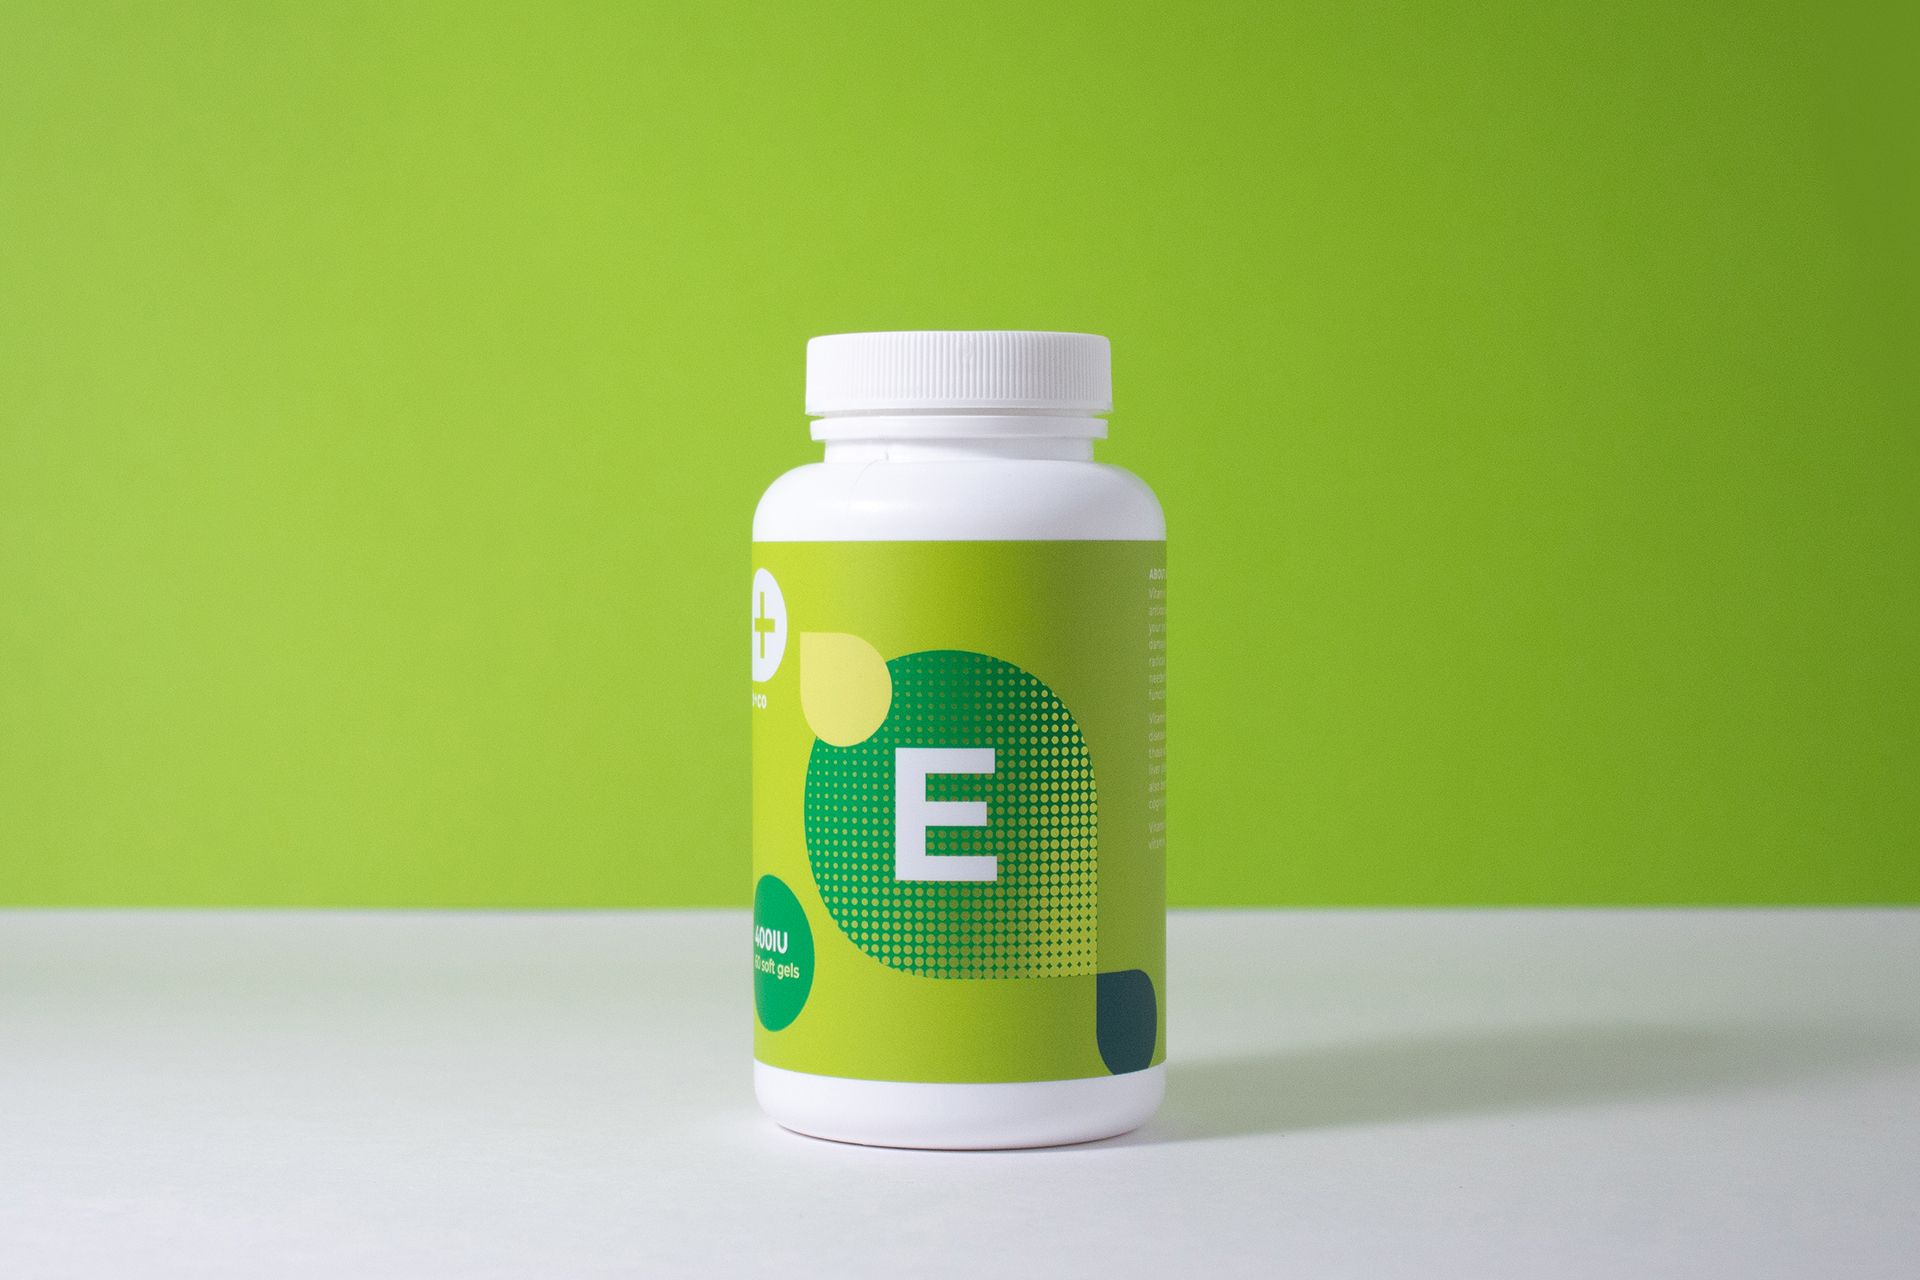 Bottle of vitamin E capsules. Eye-catching supplement label design